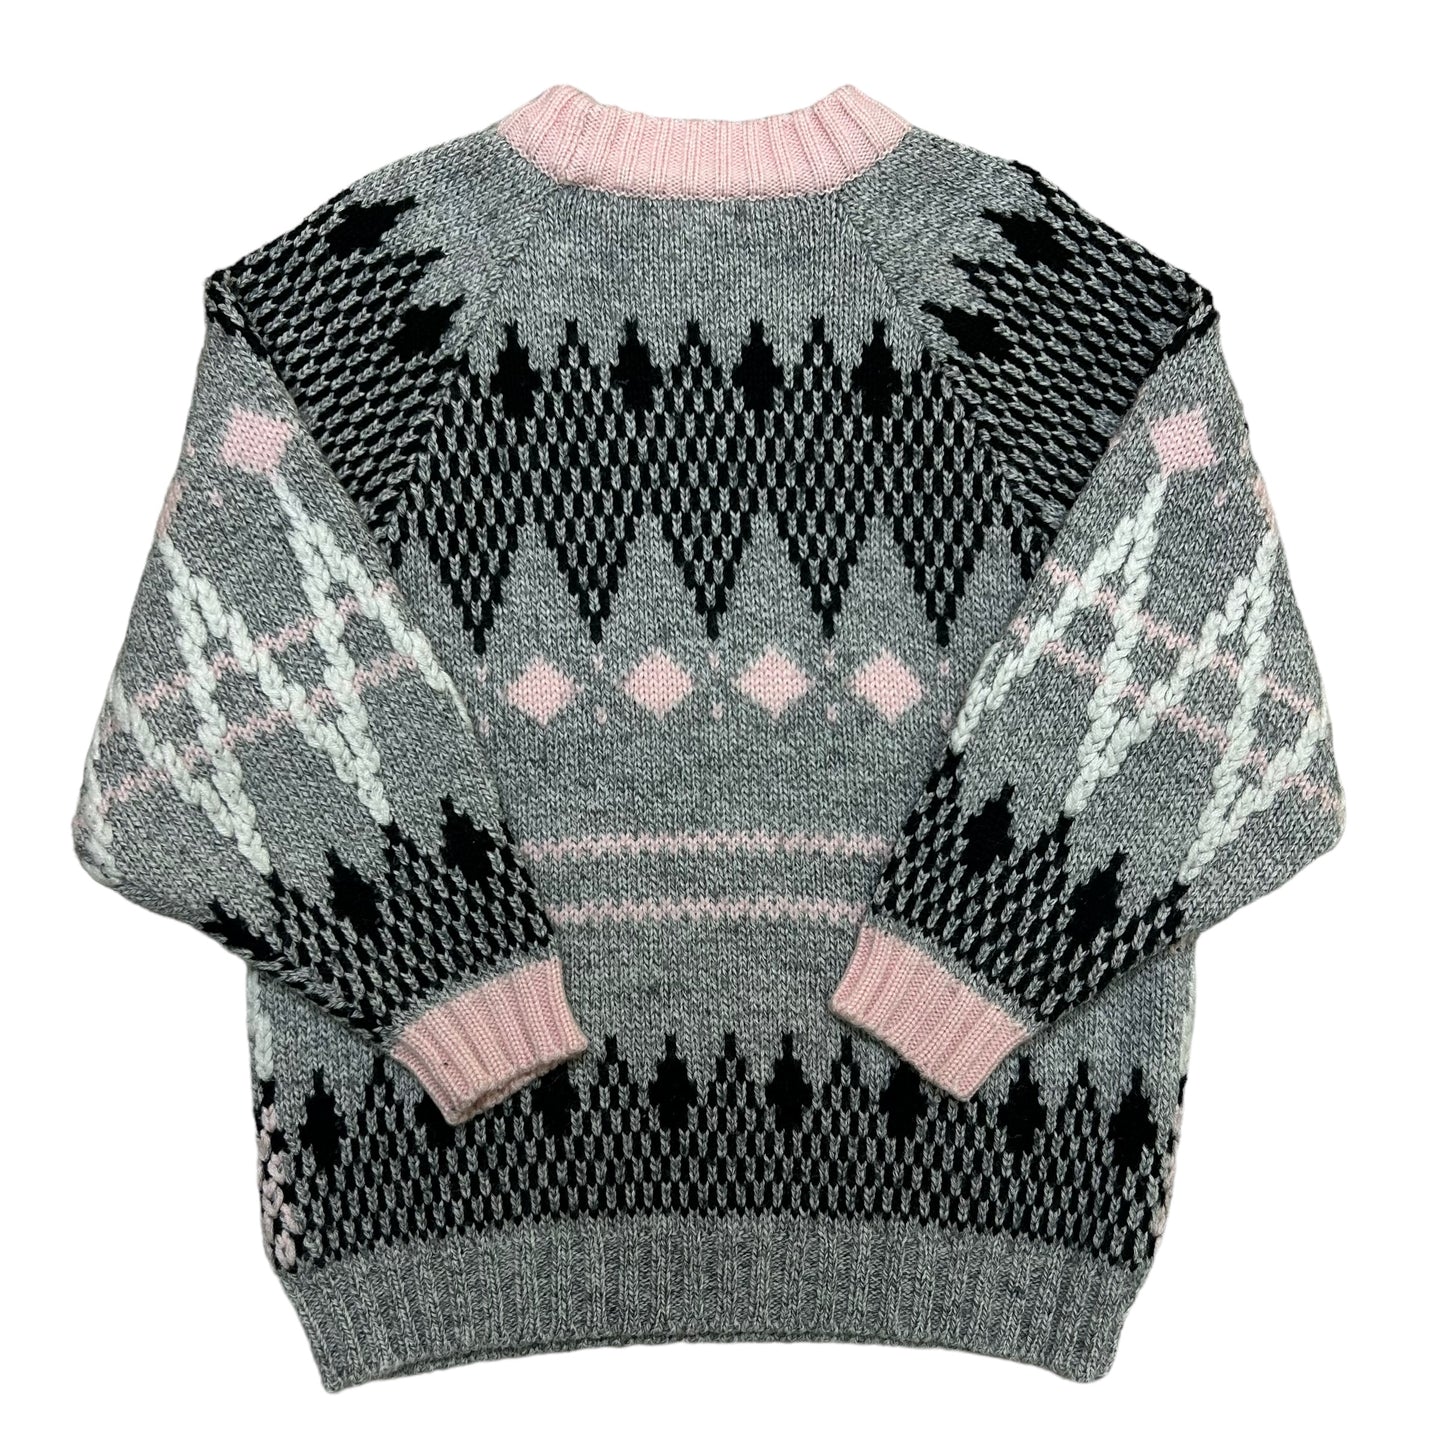 Vintage 1990s Susann D Grey/Pink Knit Sweater - Size Small (Fits M/L)